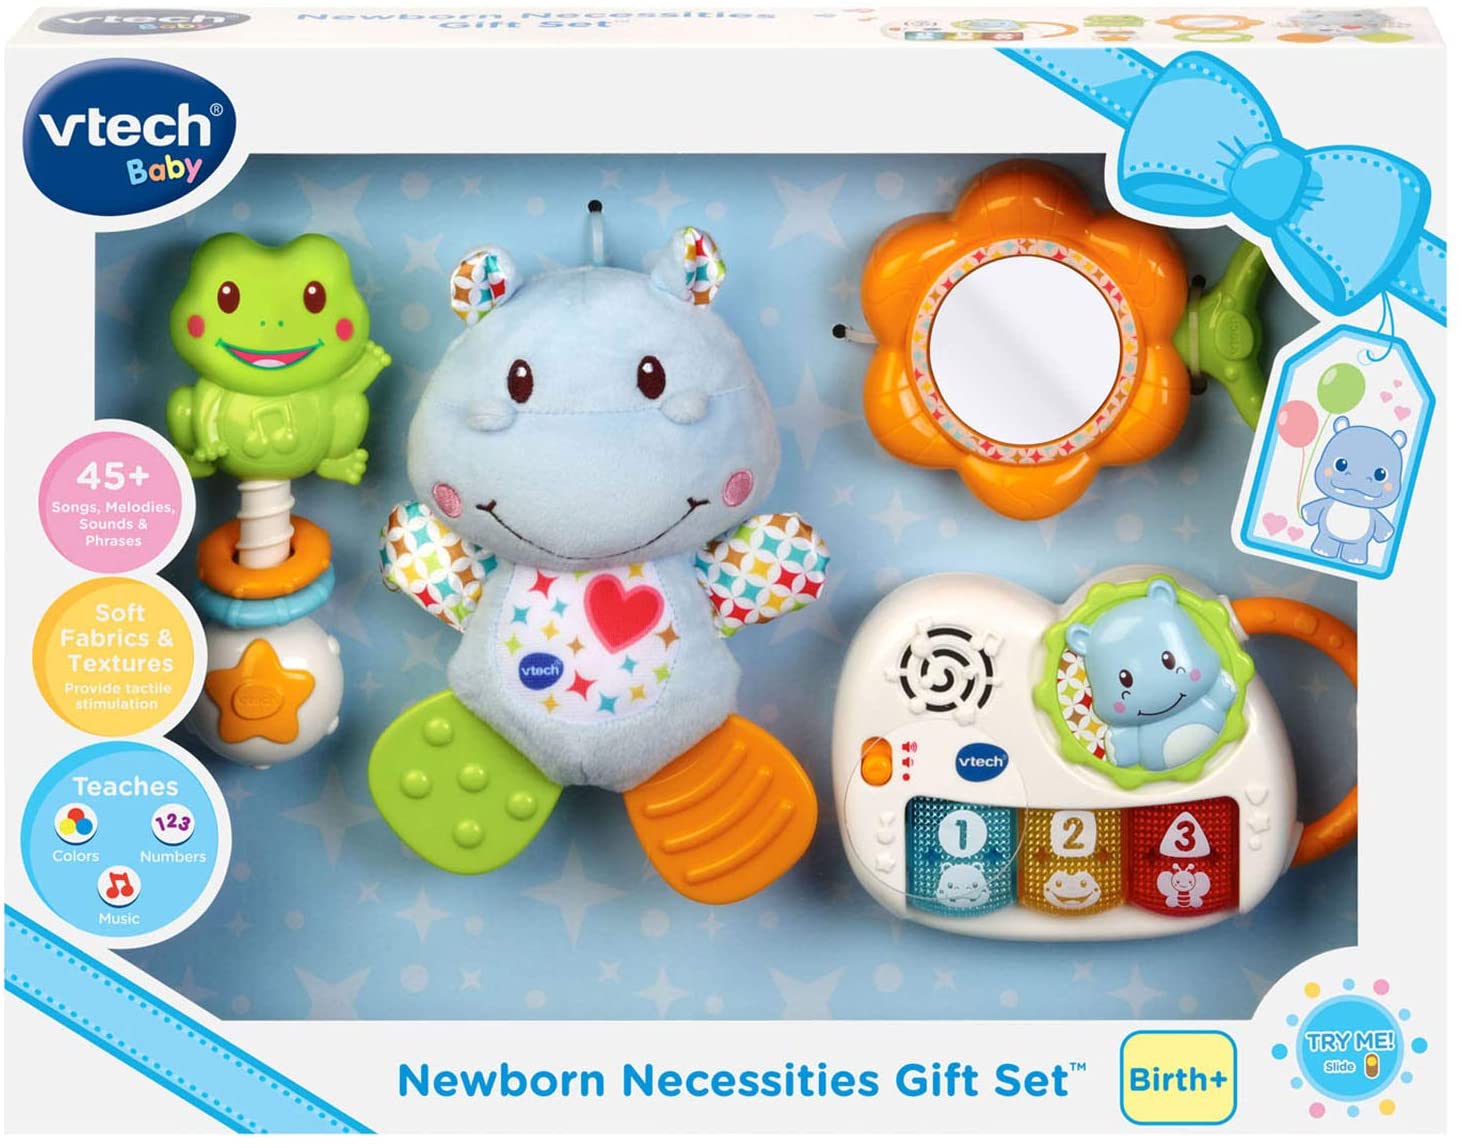 Newborn Necessities Gift Set